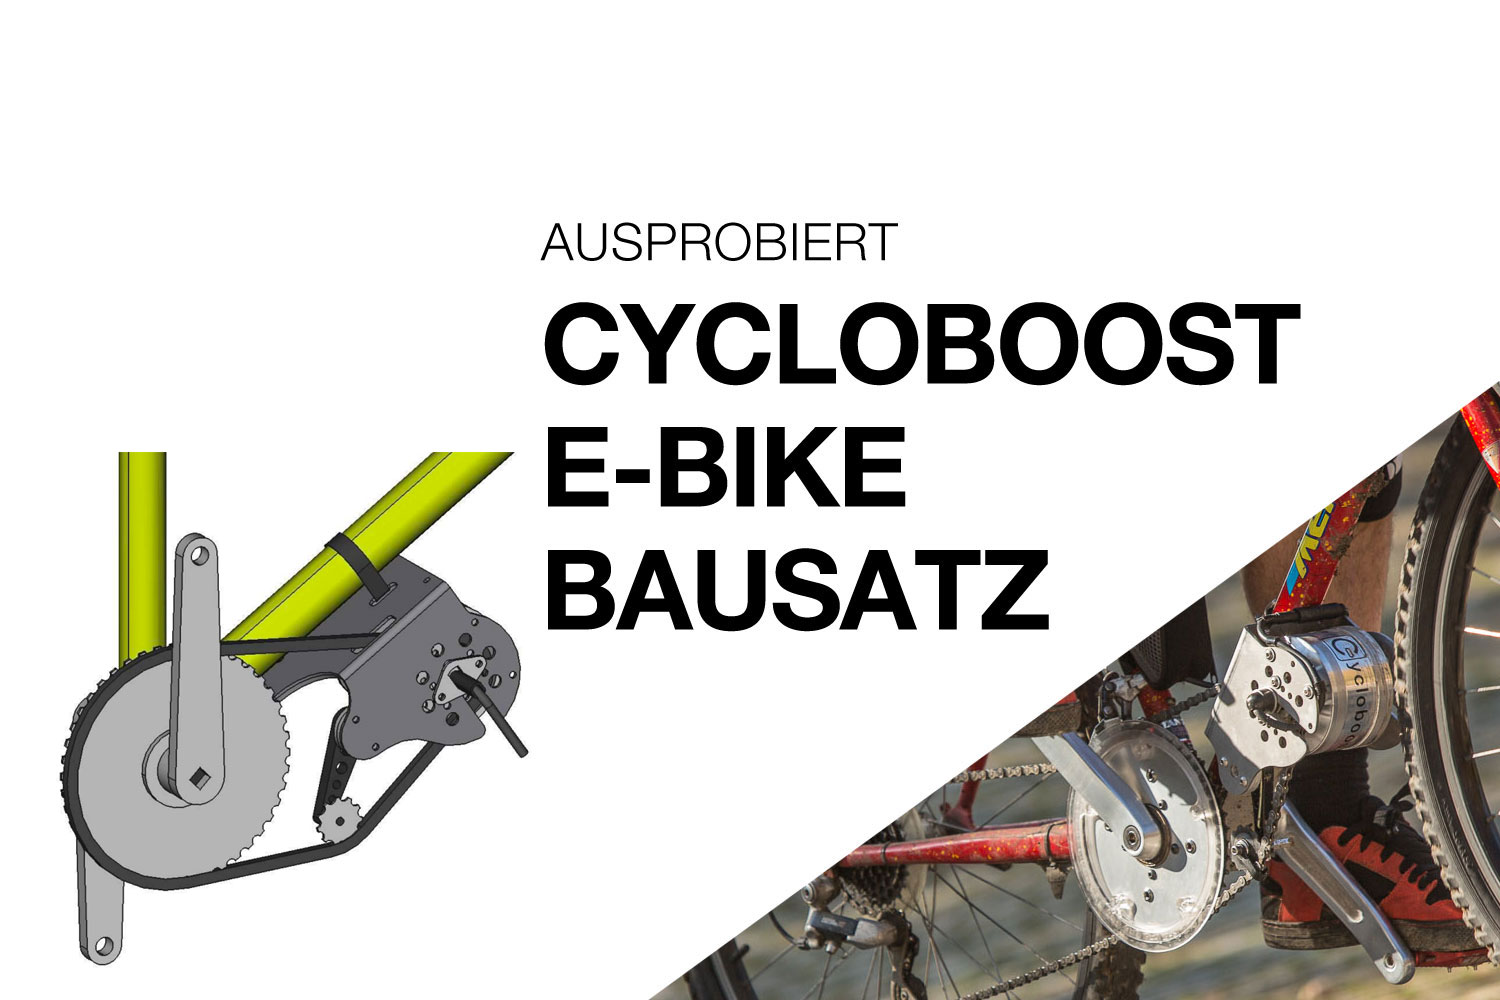 Ausprobiert] Cycloboost - ein E-Bike Bausatz im Fotografentest - MTB-News.de